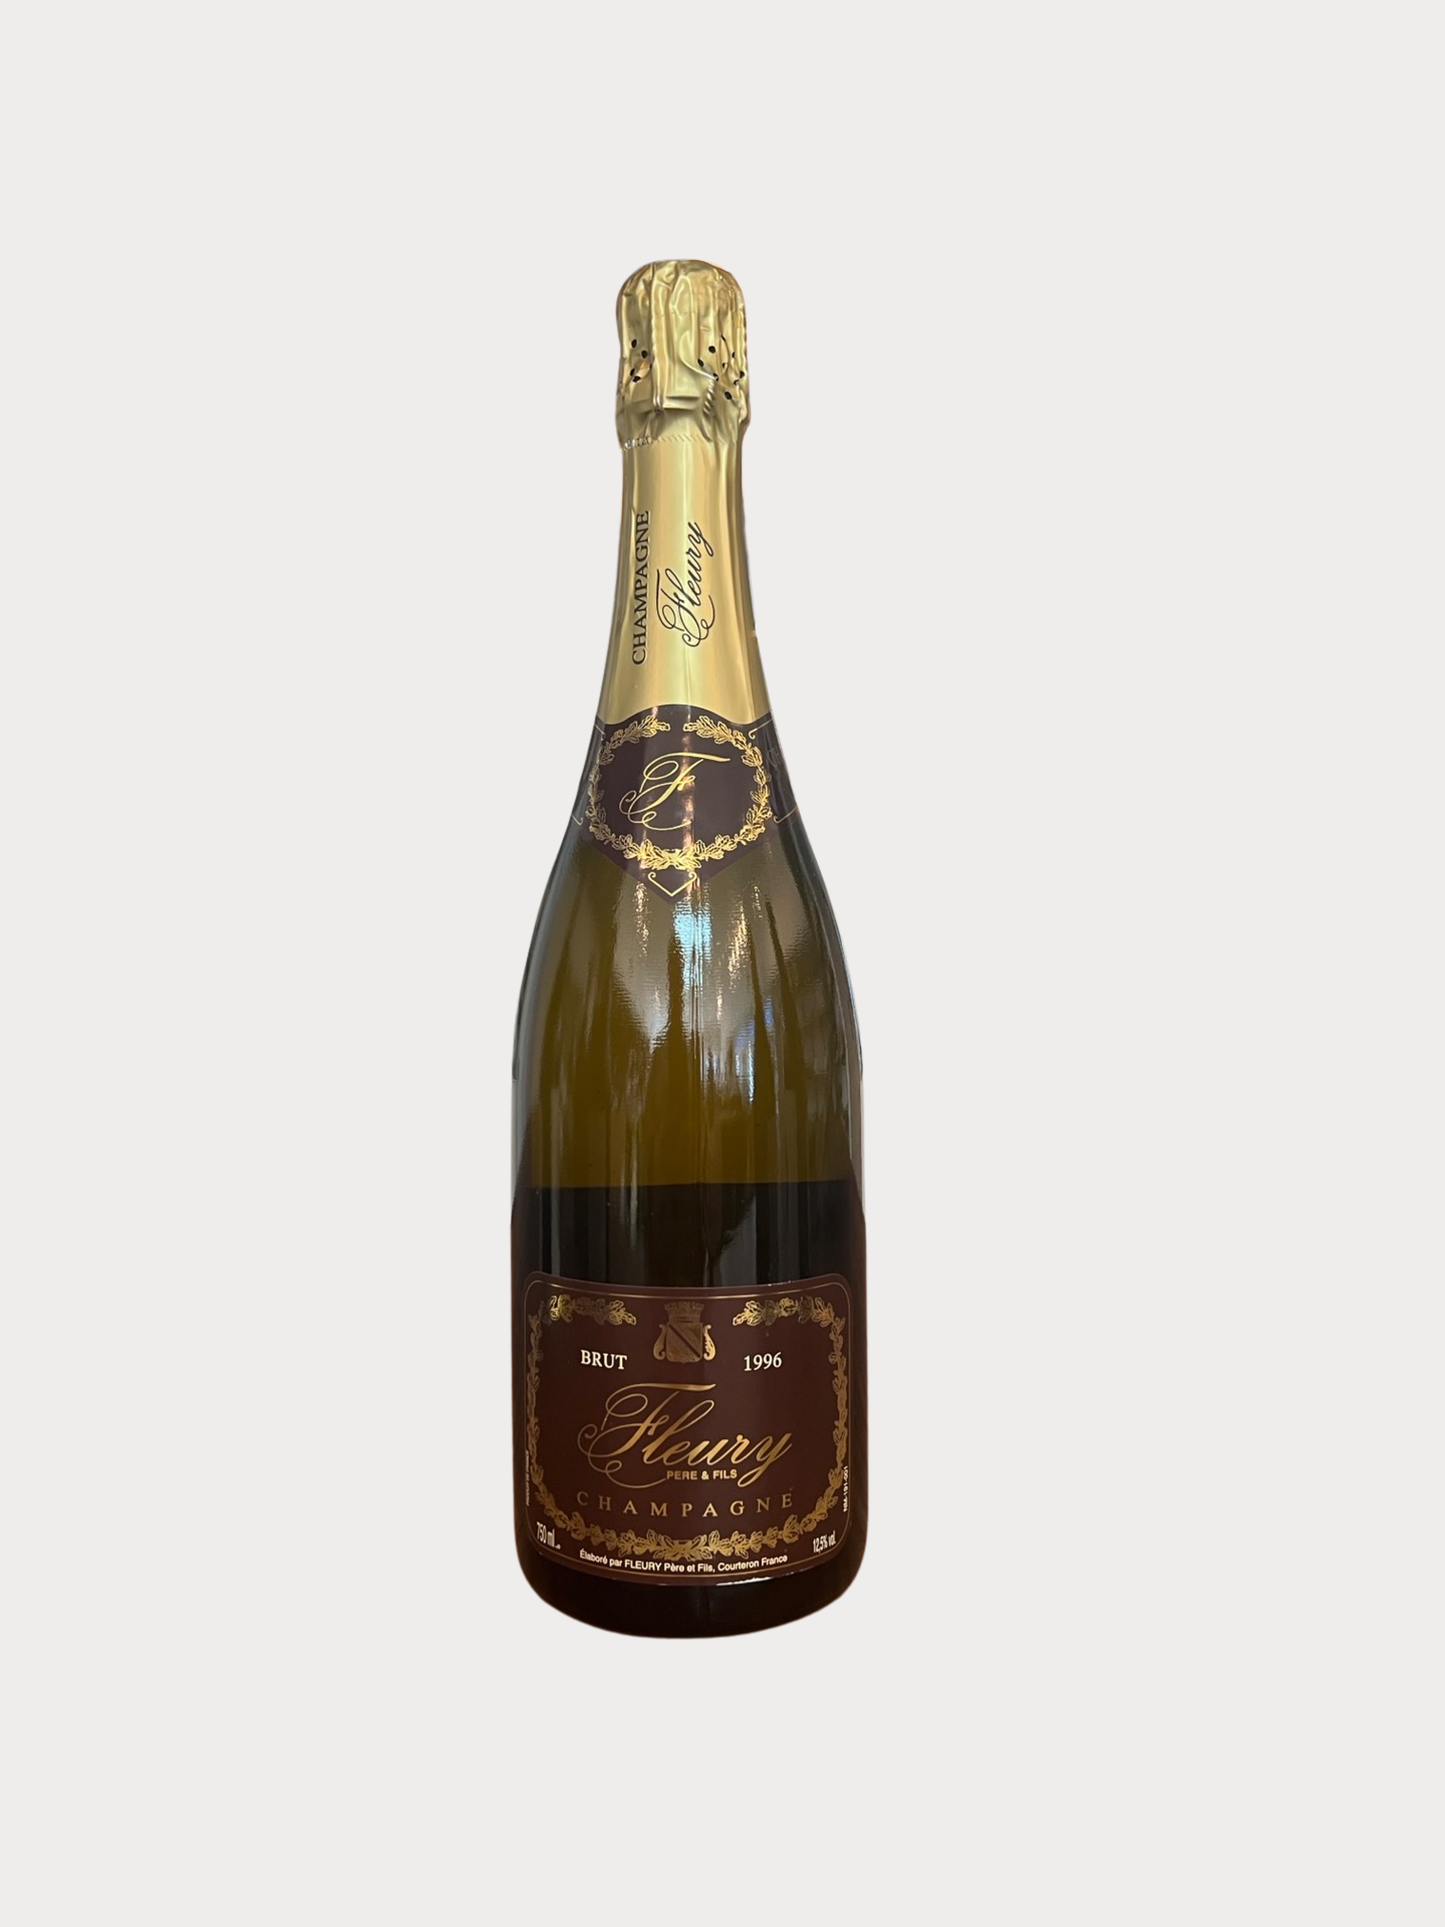 1996 Champagne Fleury Millesime Brut